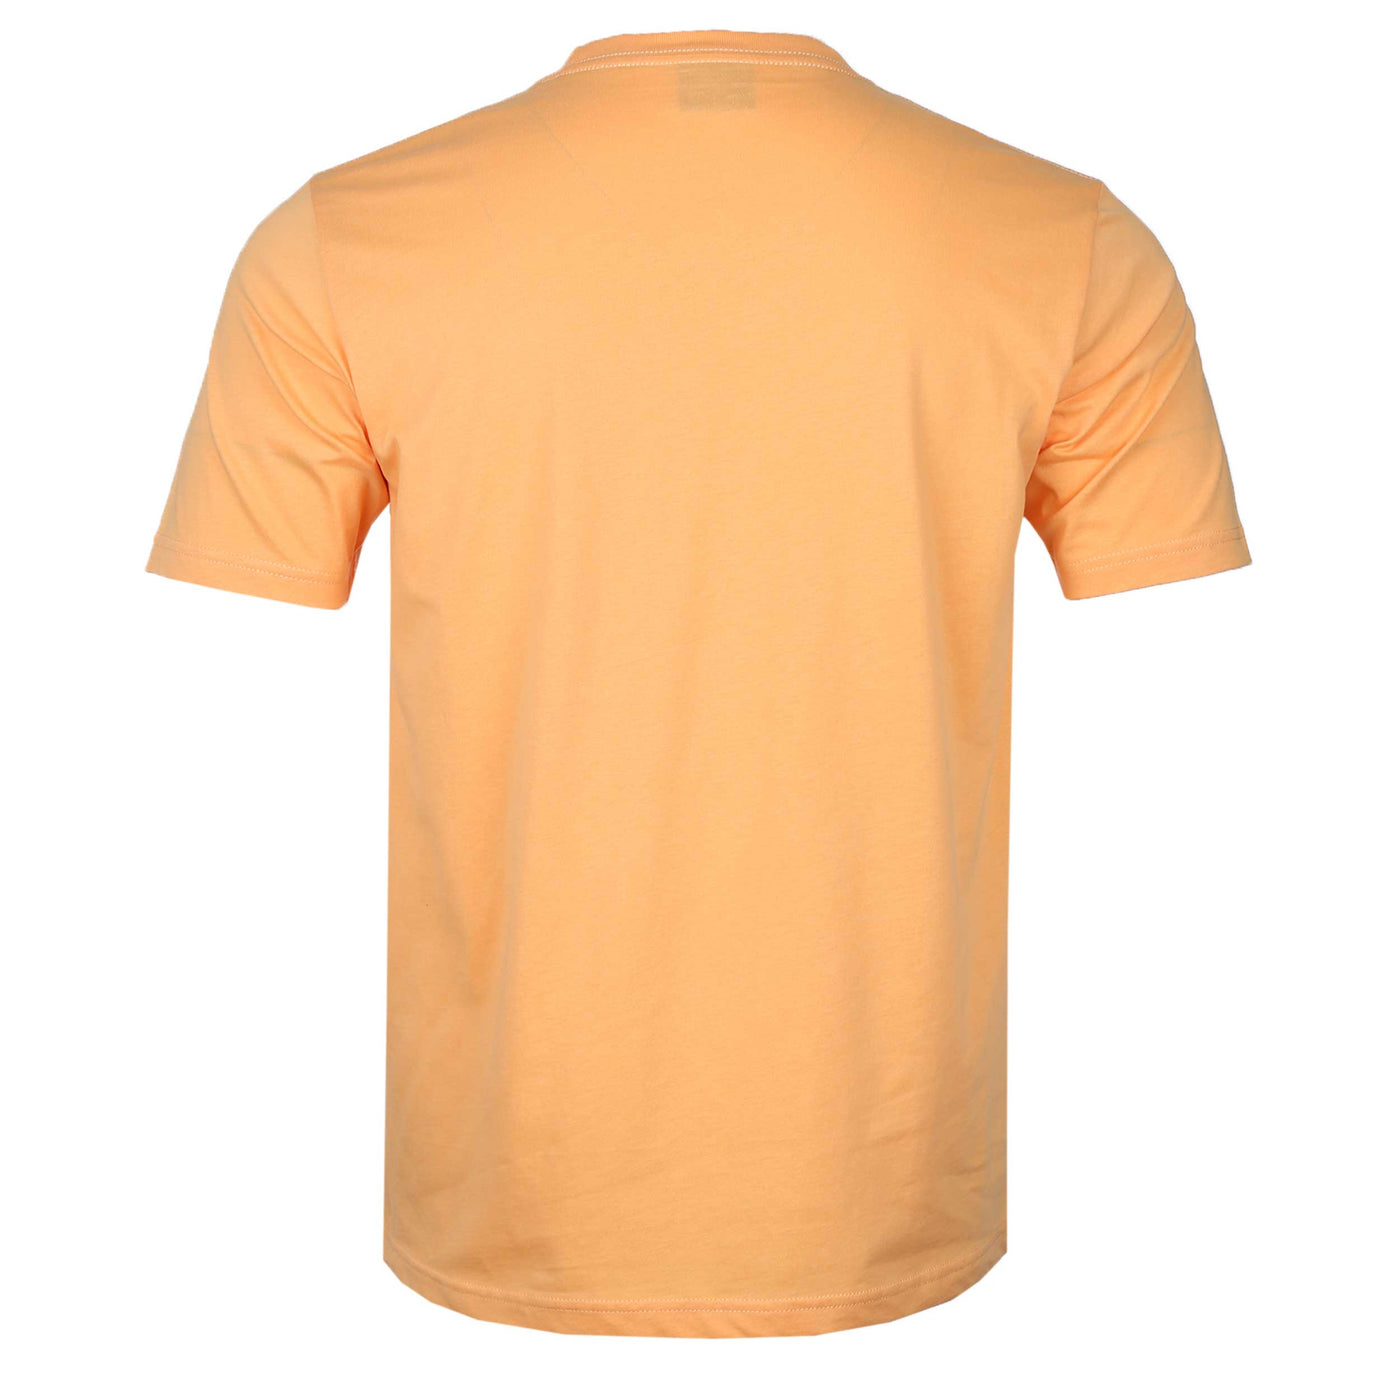 Paul Smith Zebra Badge T Shirt in Tangerine Back